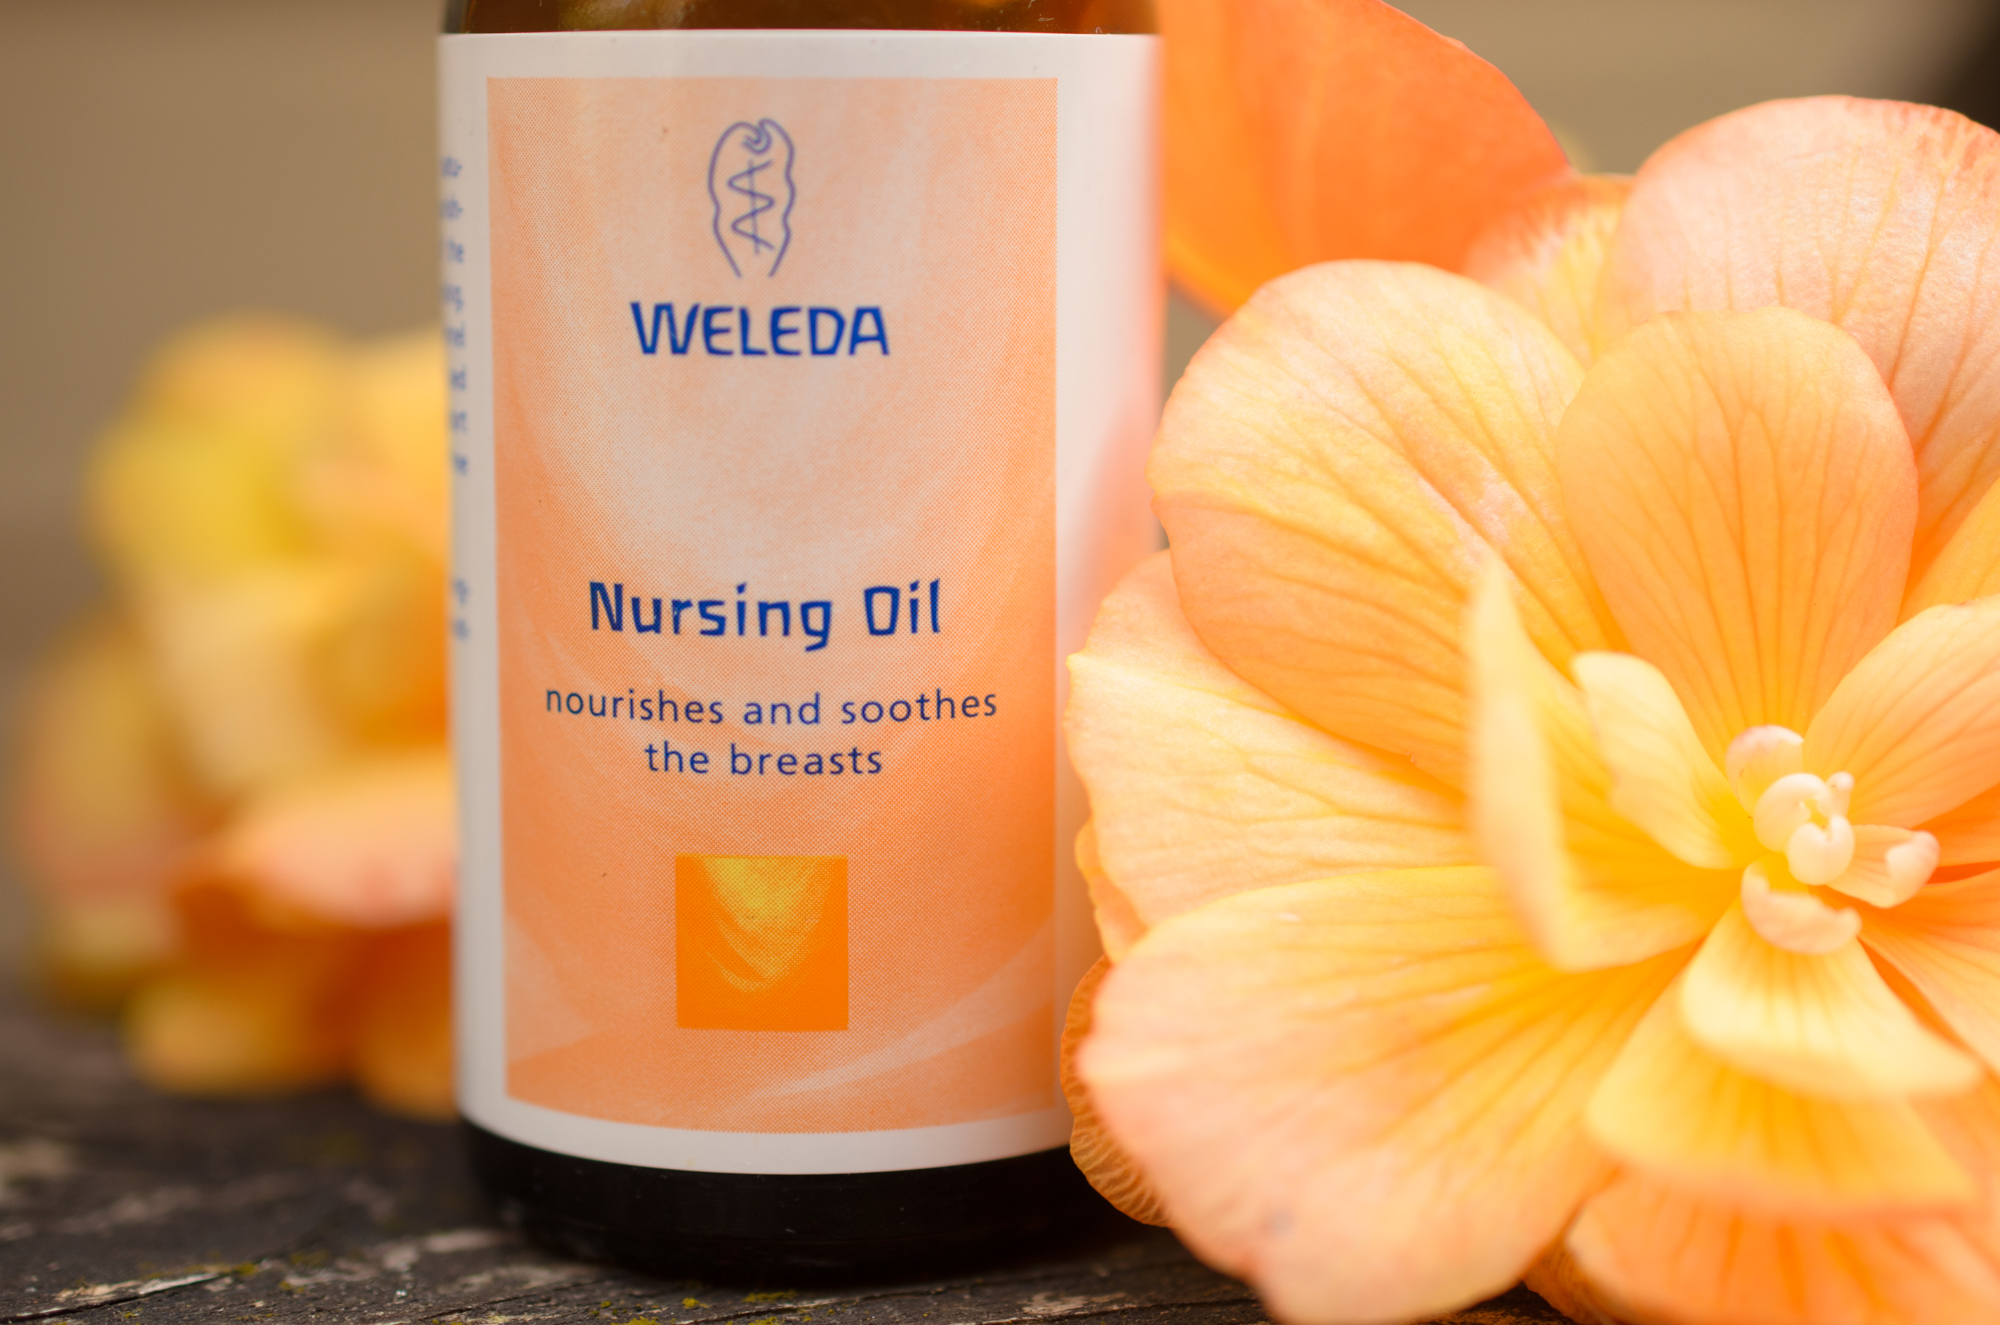 Weleda nursing oil